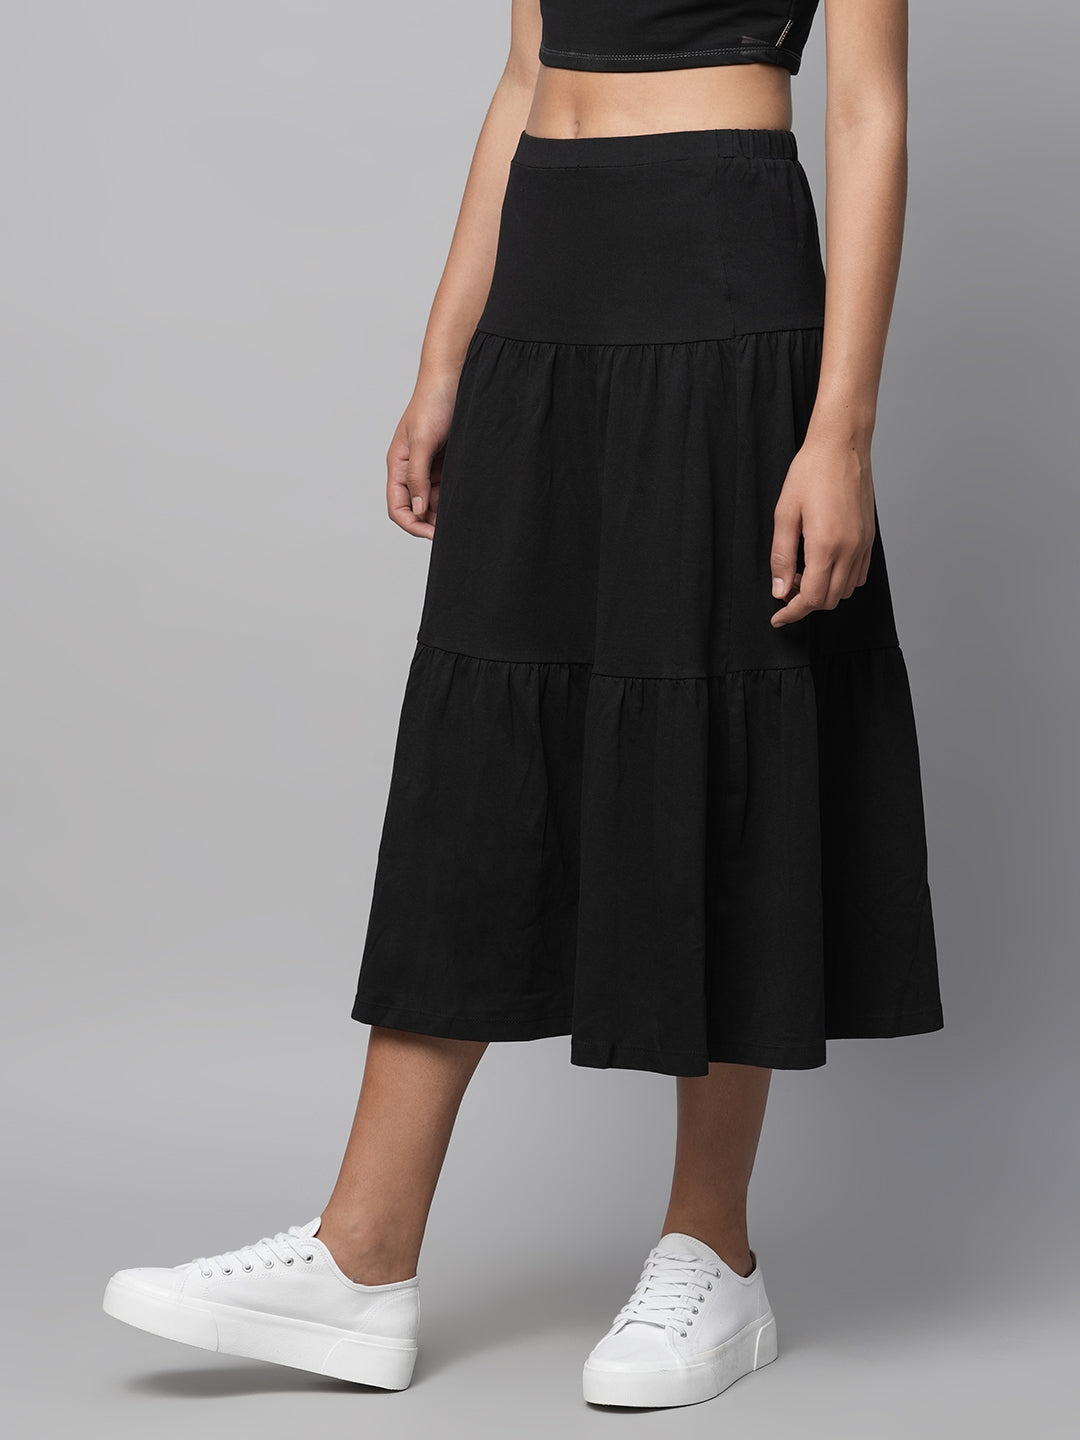 Cotton Jersey Tiered Skirt